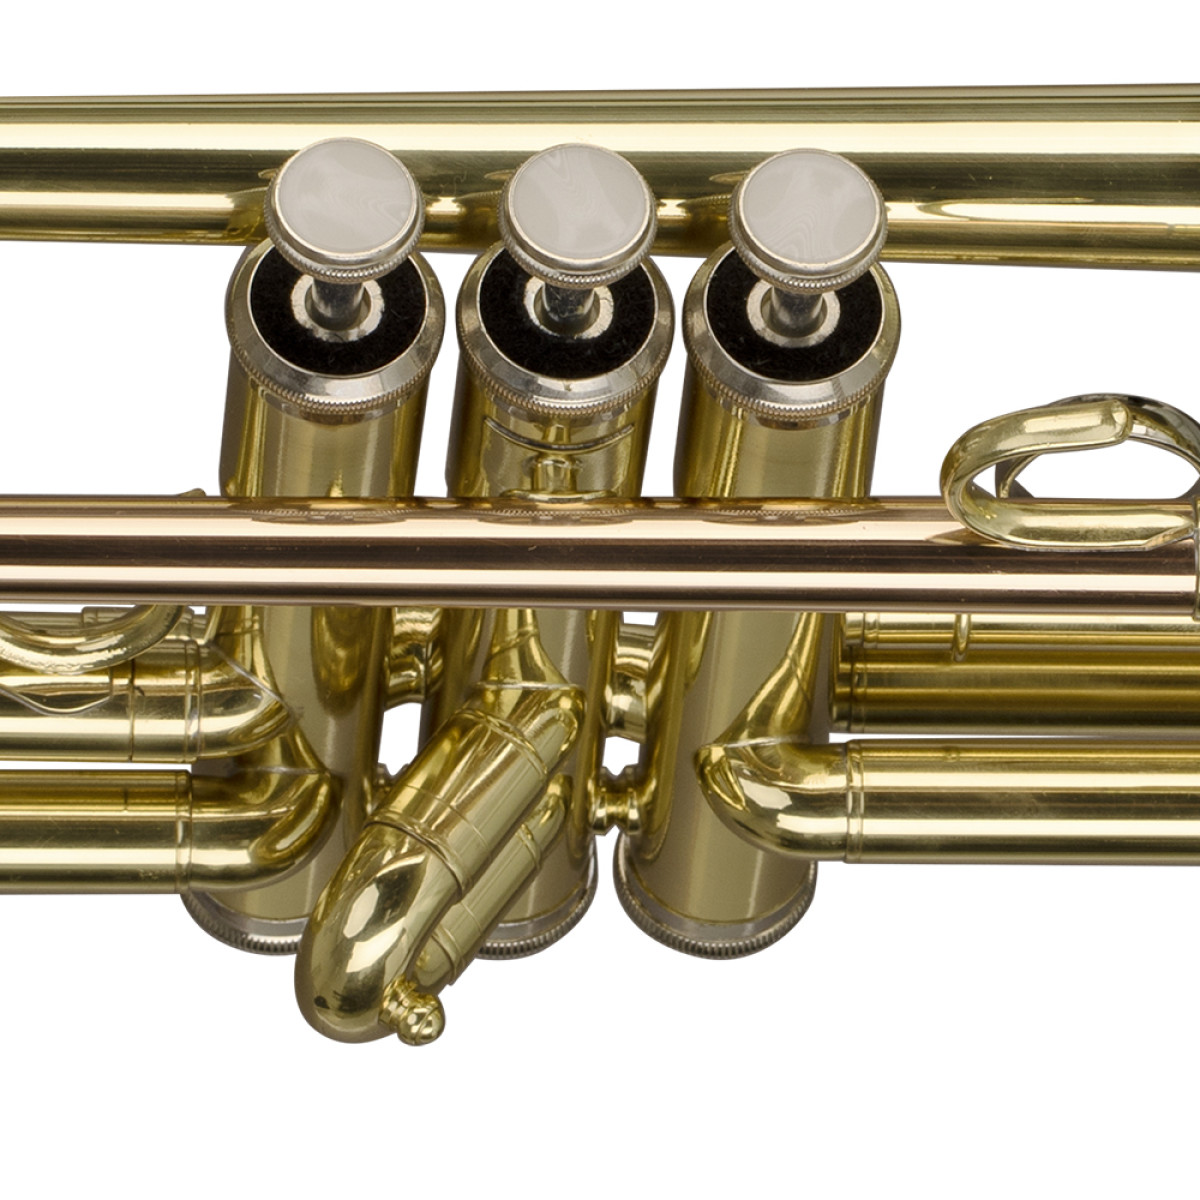 Stagg Tr215s - Trompette Étude - Variation 1